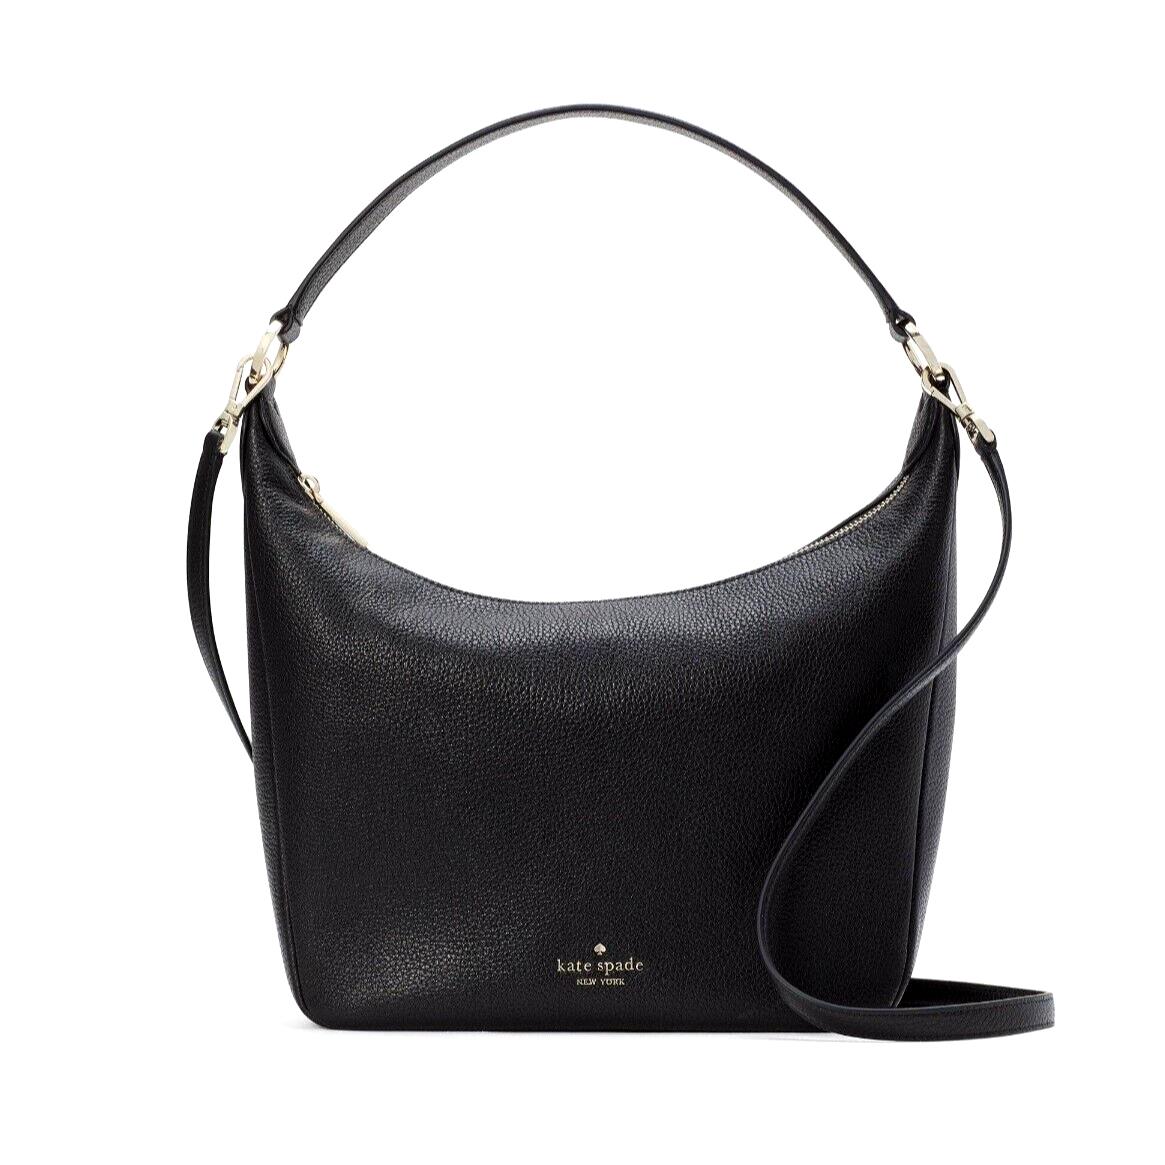 New Kate Spade Leila Hobo Shoulder Bag Pebble Leather Black with Dust Bag - Exterior: Black